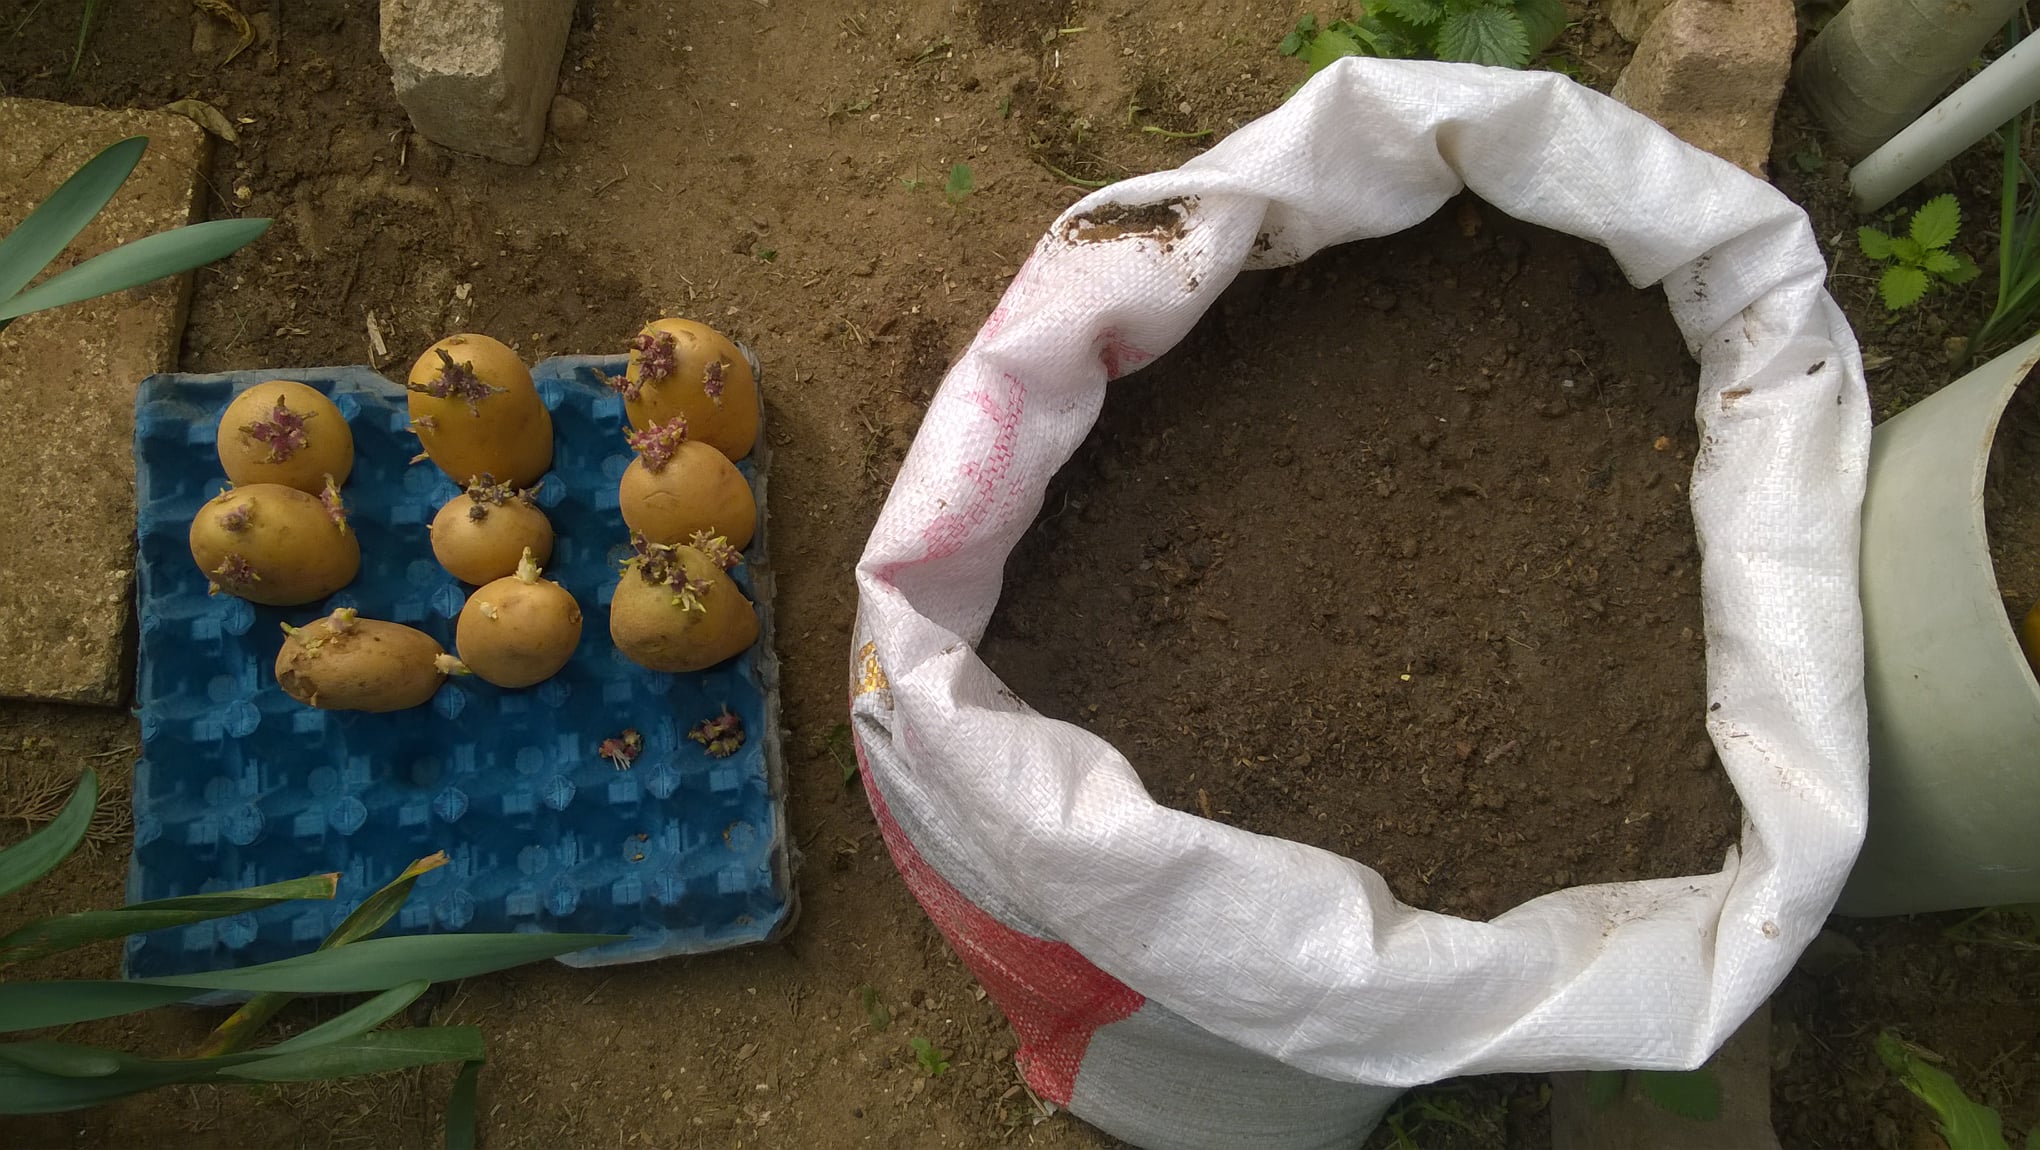 Planting potatoes in bags 